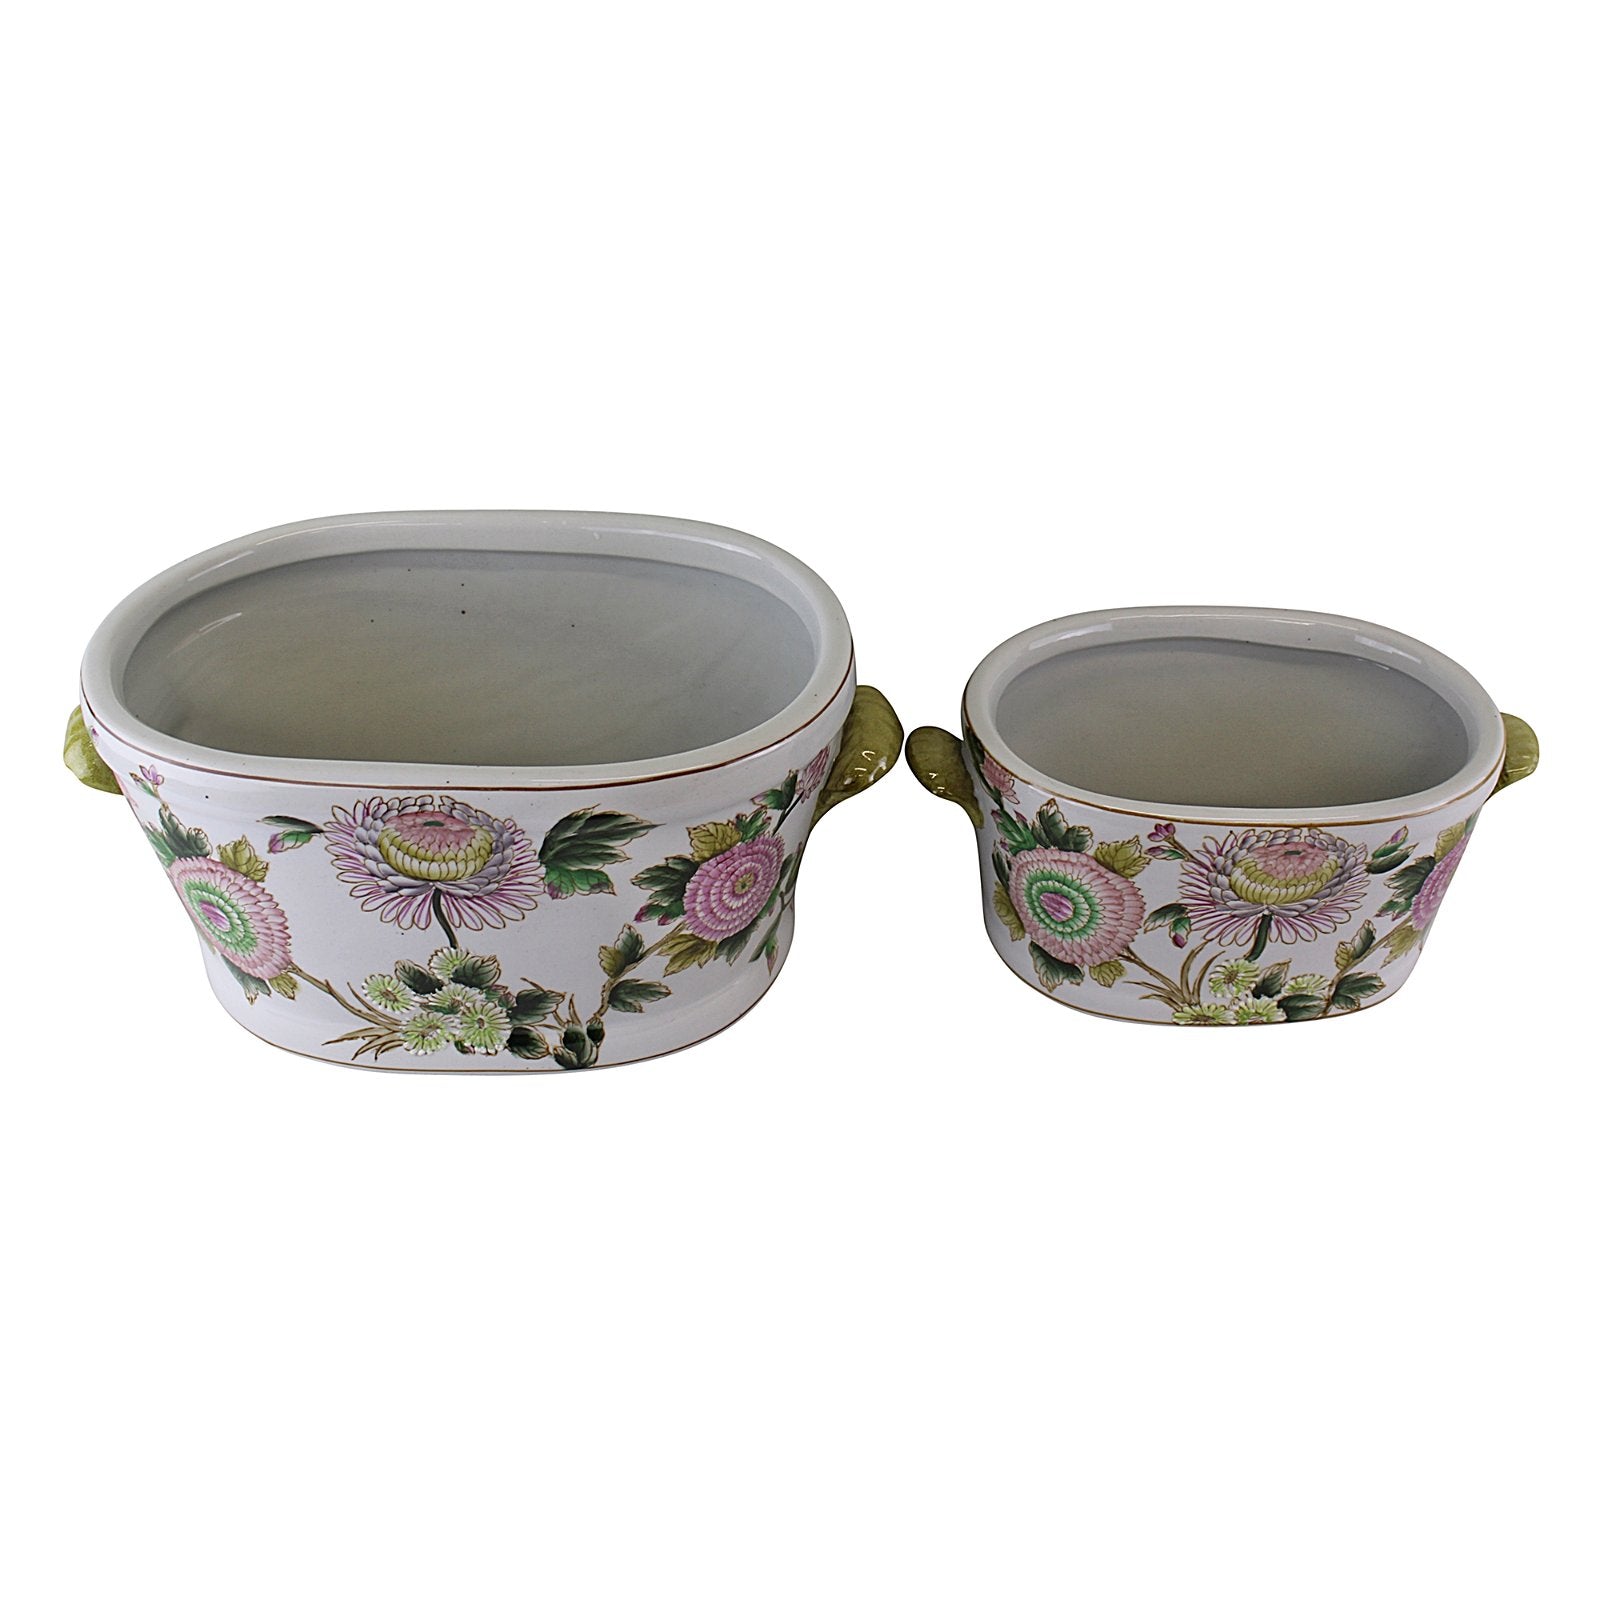 Set of 2 Ceramic Footbath Planters, Floral Design